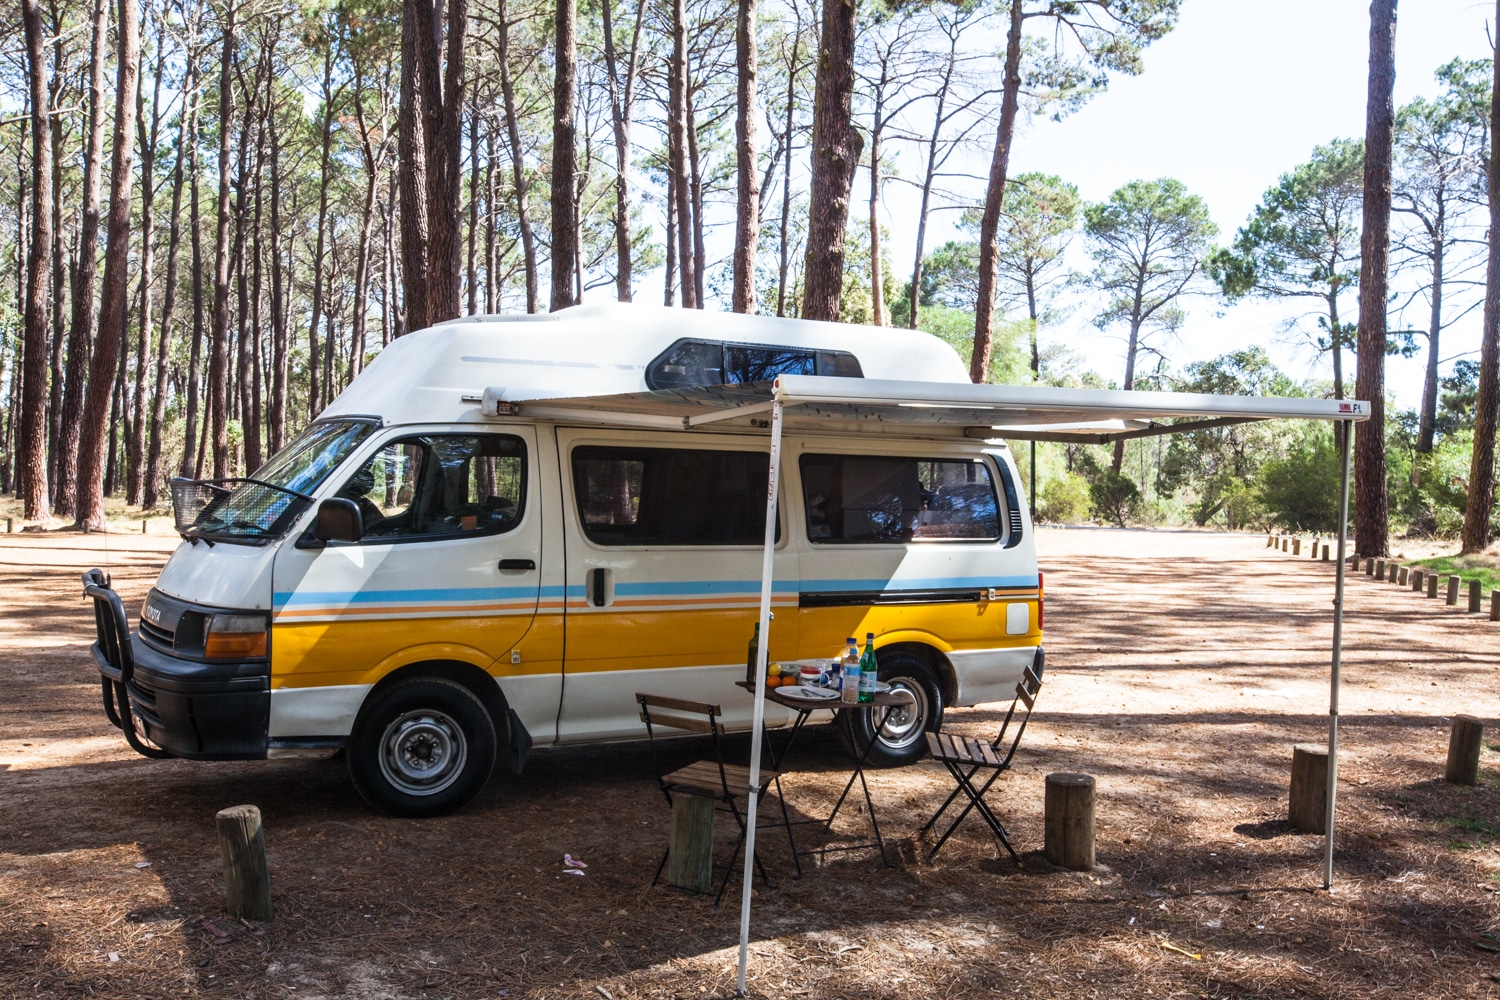 Barre de volant Antivol Milenco pour Camping-car, voiture, fourgon..